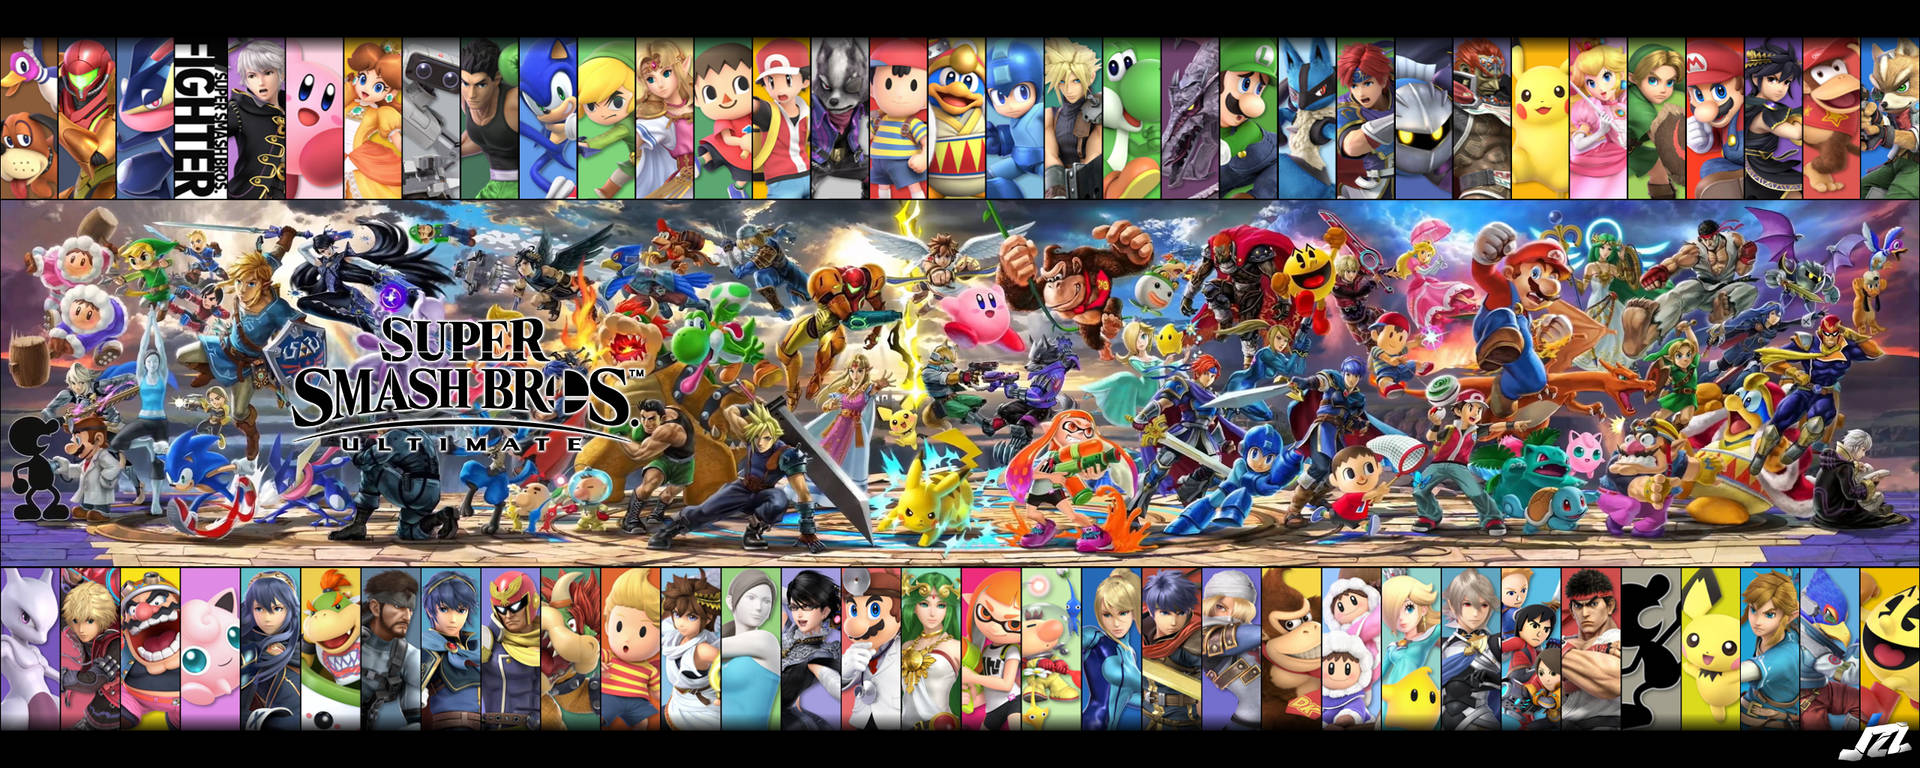 Super Smash Bros Ultimate Hero Banners Background